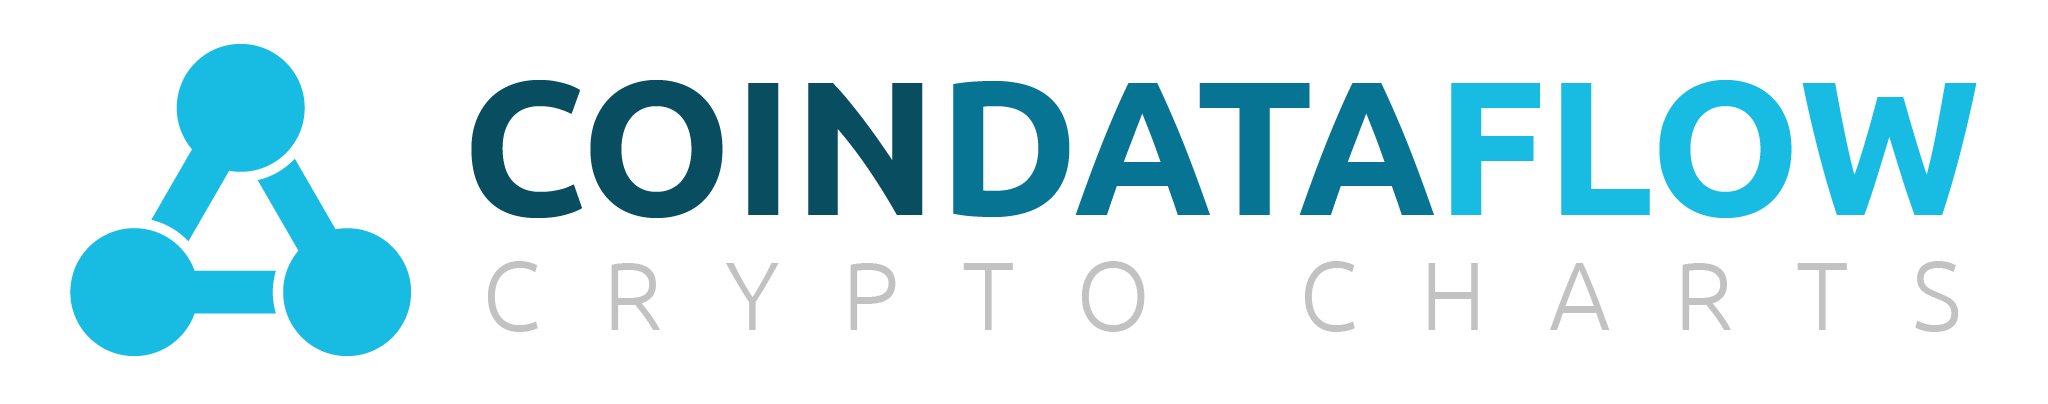 coindataflow_logo